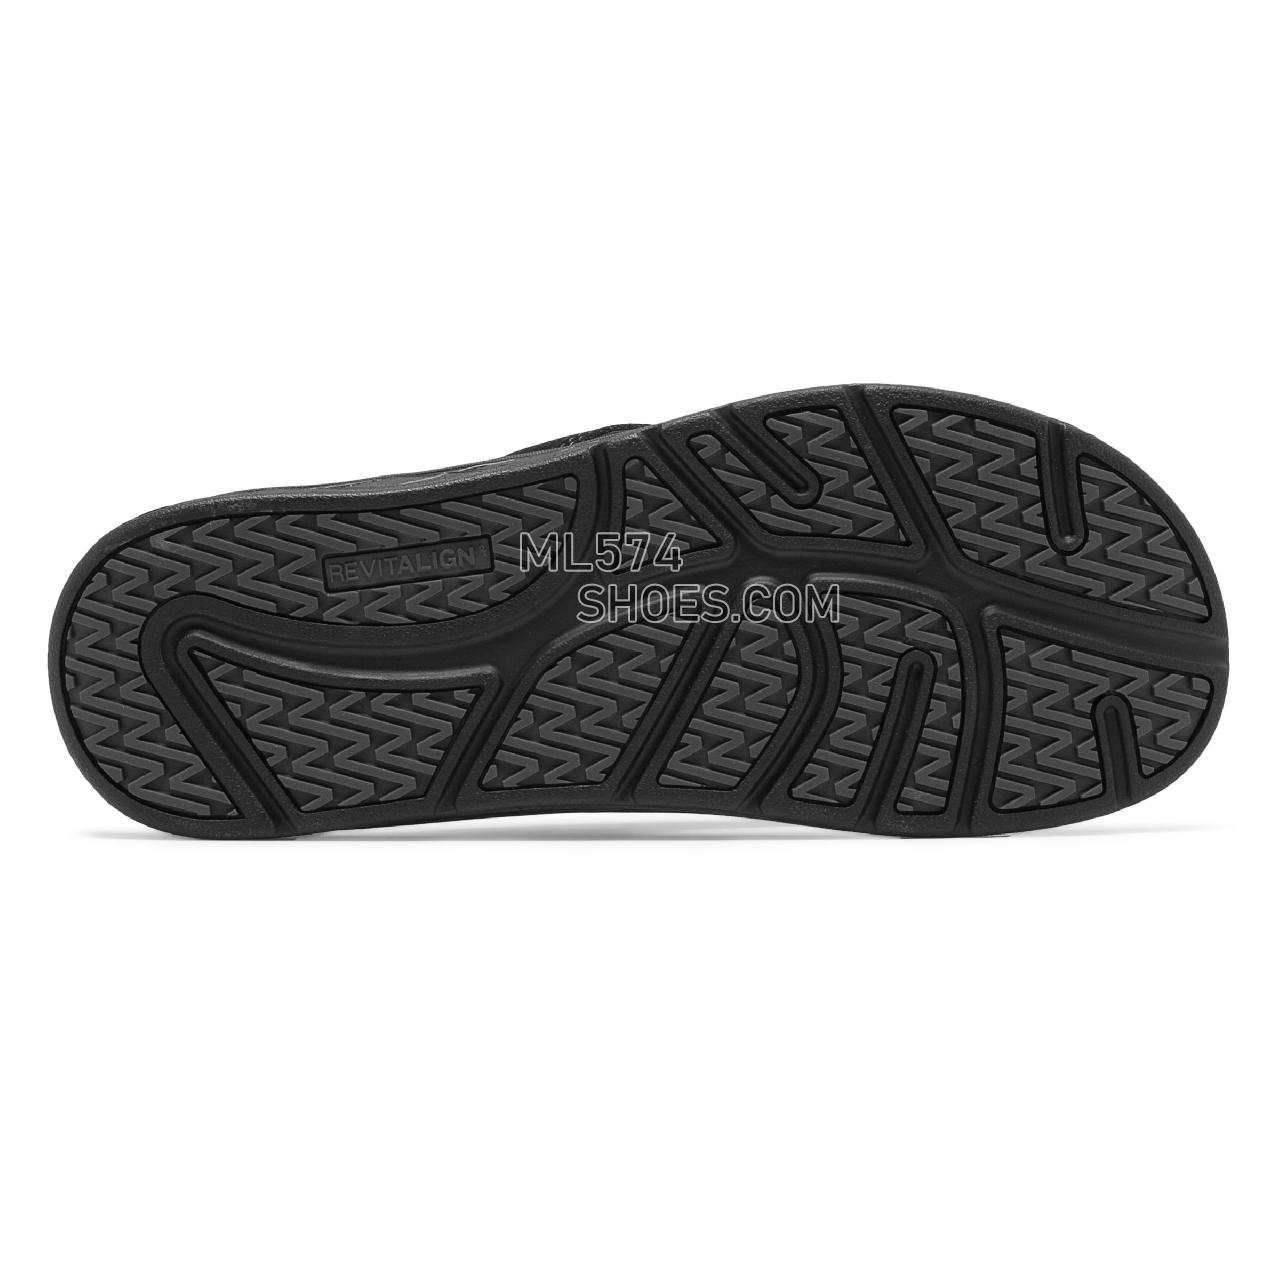 New Balance Pinnacle Flip - Men's 6100 - Sandals Black - MR6100BK